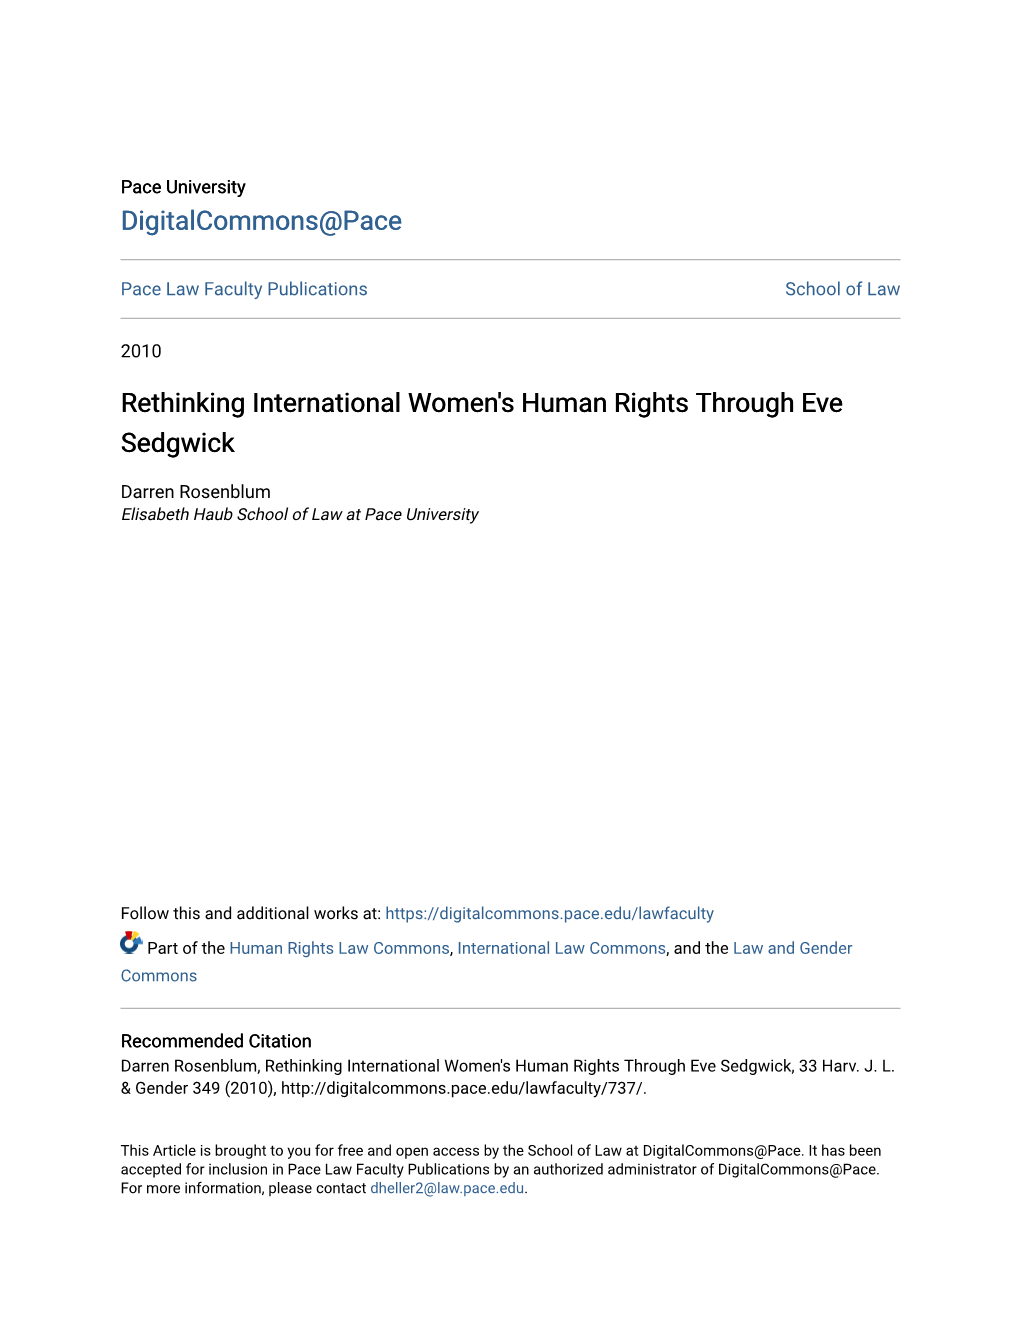 Rethinking International Women's Human Rights Through Eve Sedgwick